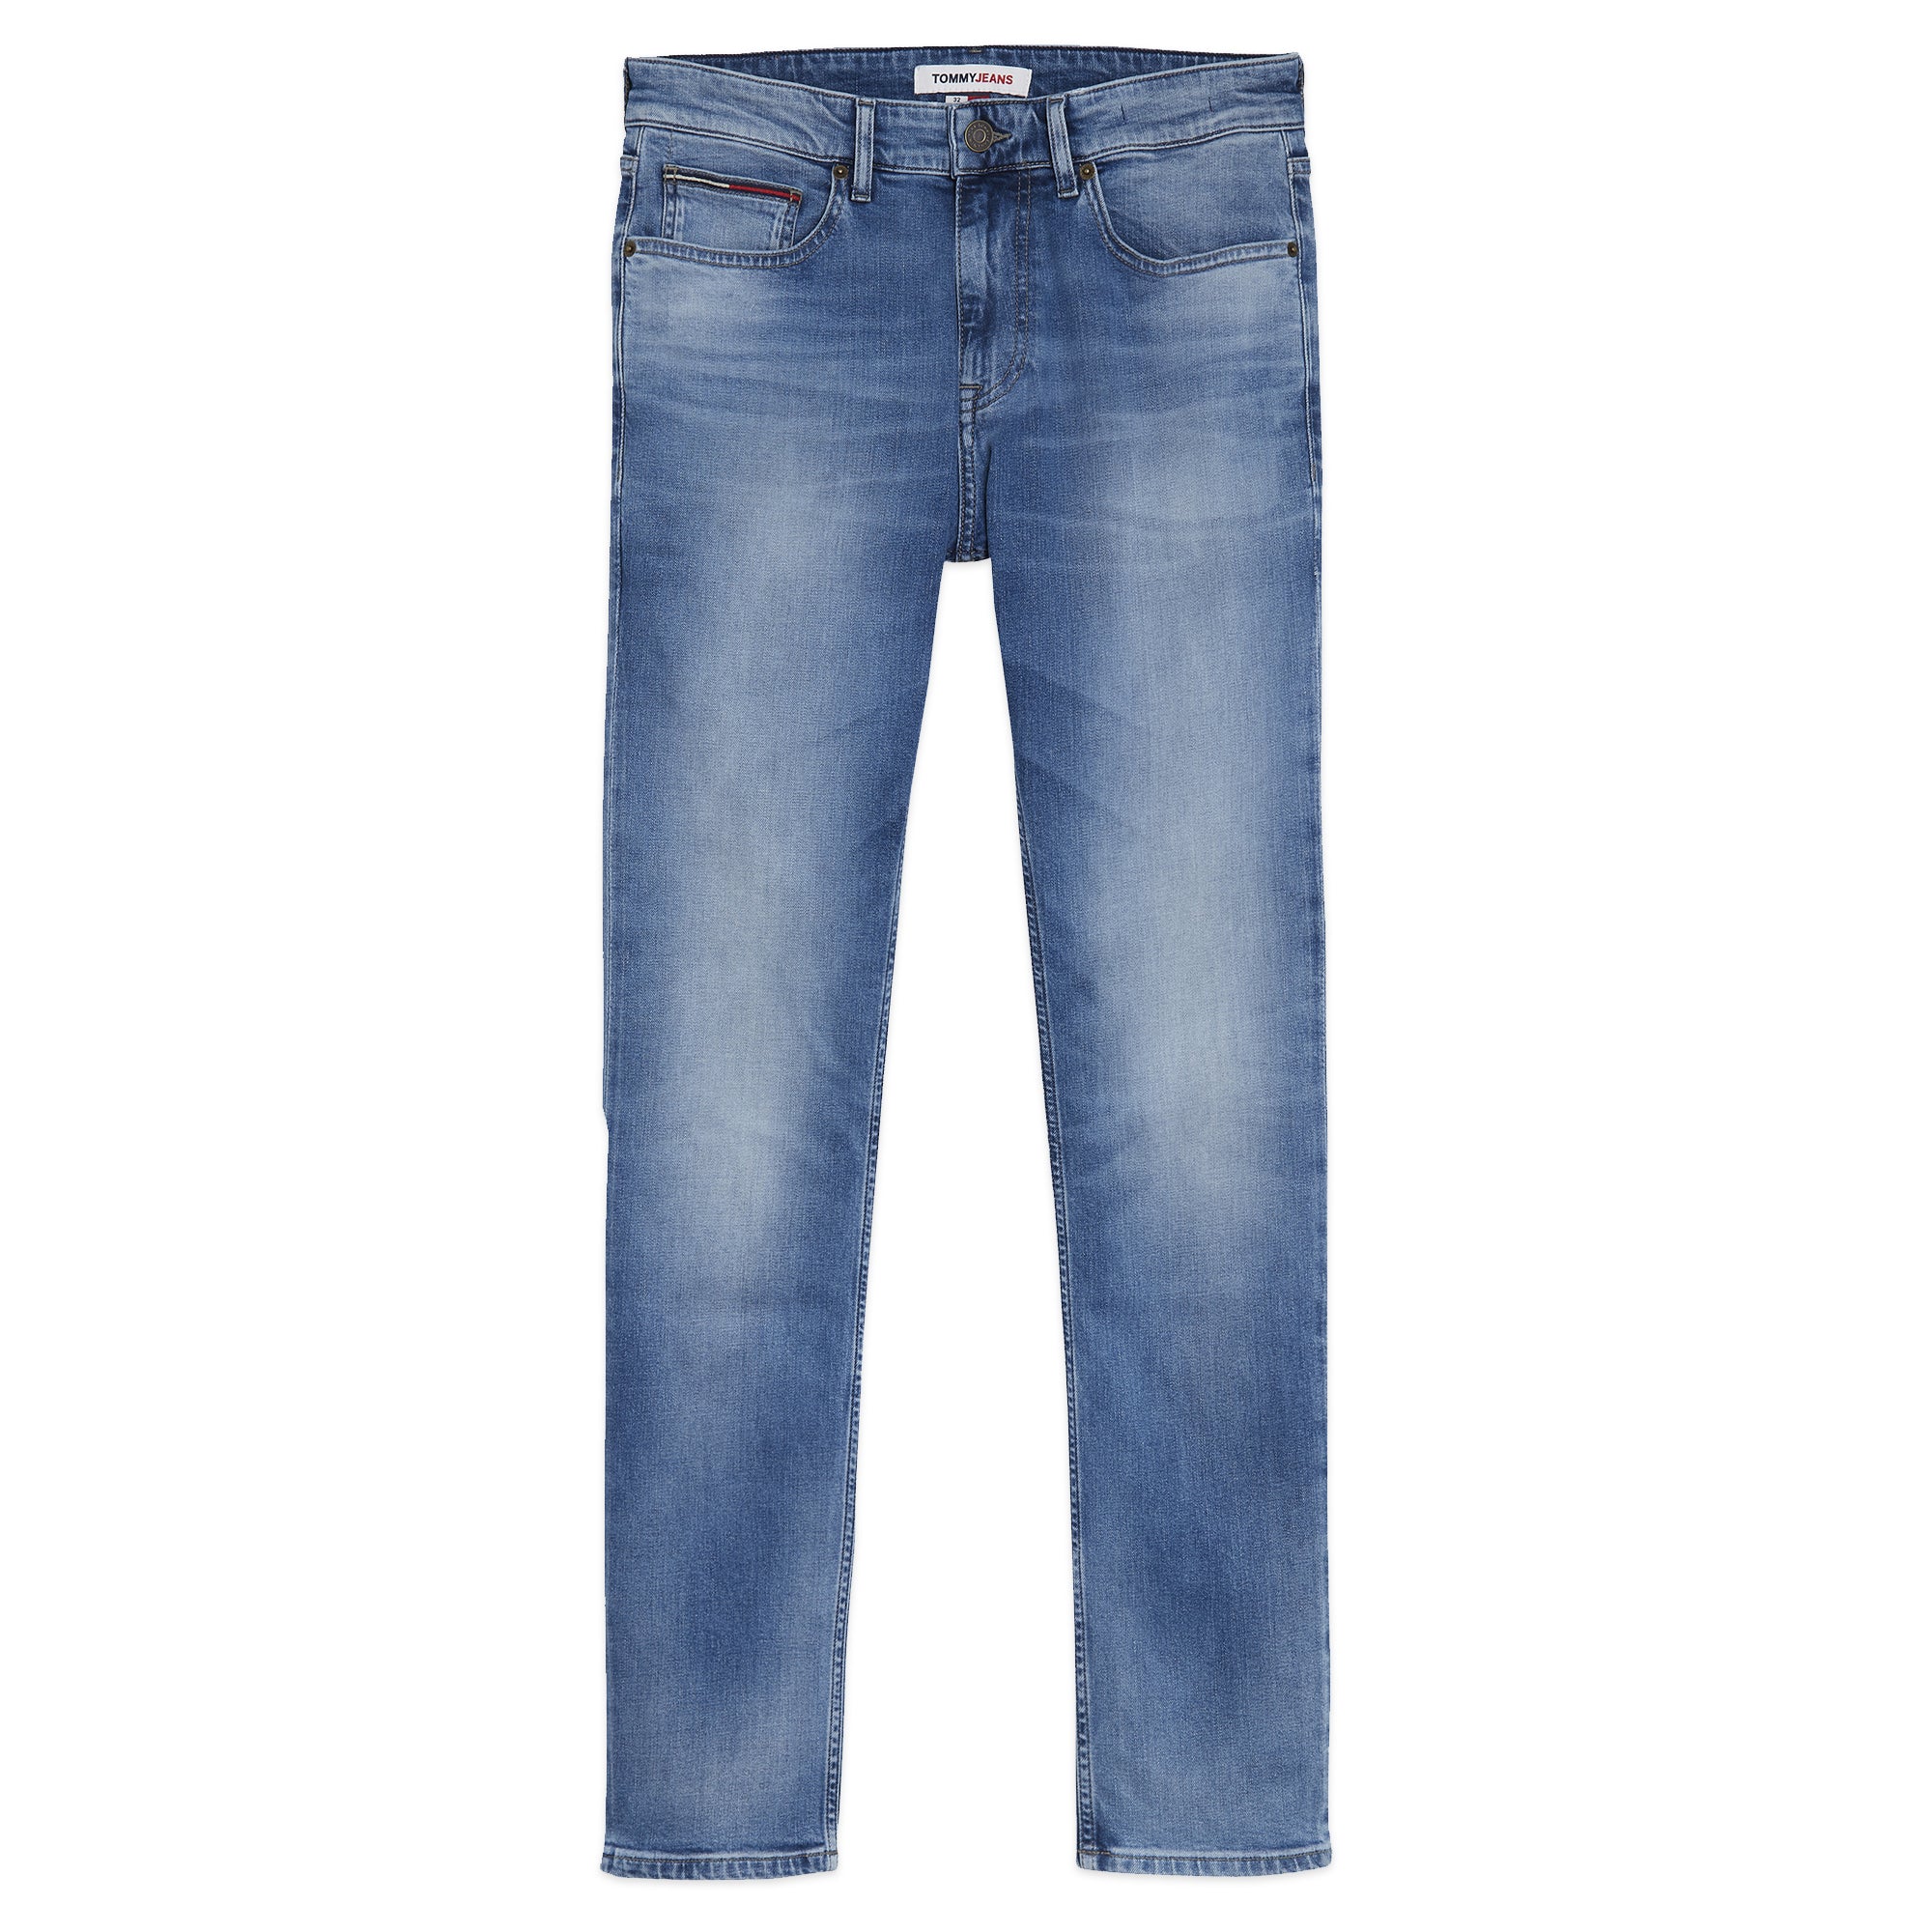 Jeans Wilson - Stretch Light Slim Jeans Scanton Blue Tommy